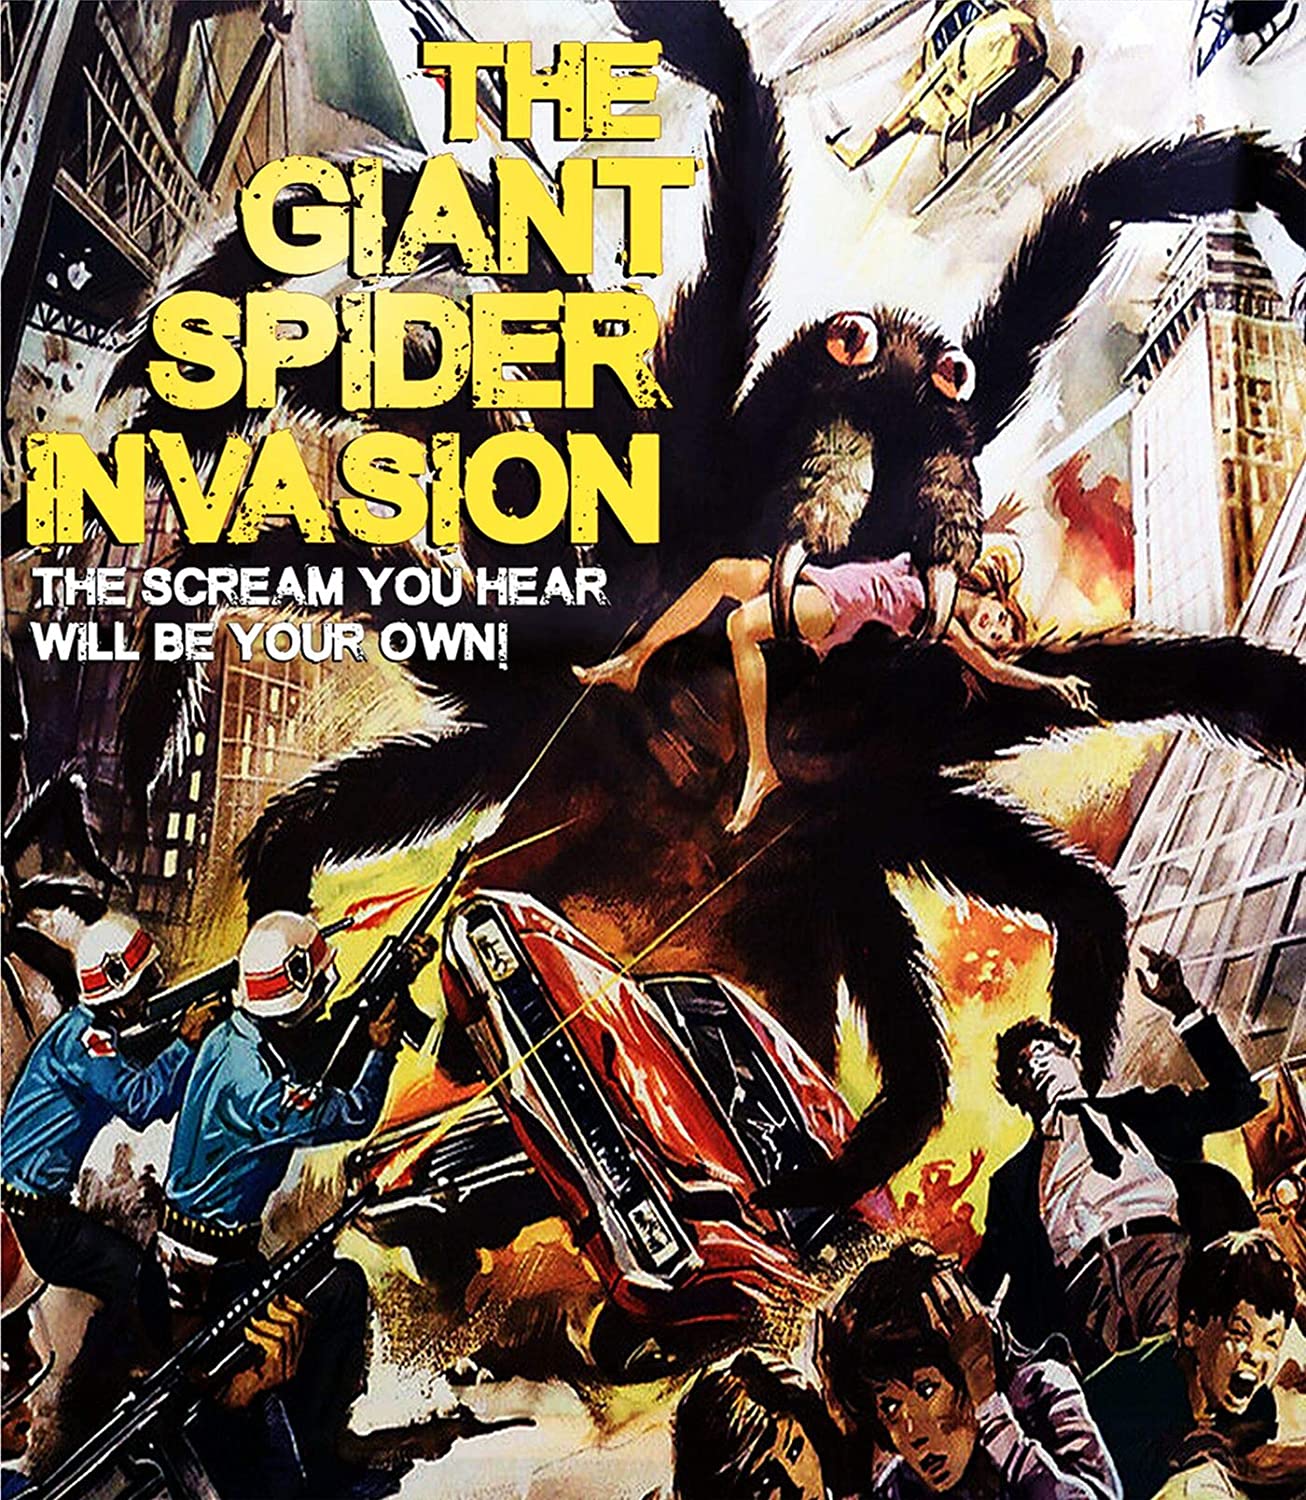 The Giant Spider Invasion (1975) starring Steve Brodie, Barbara Hale, Alan Hale Jr.